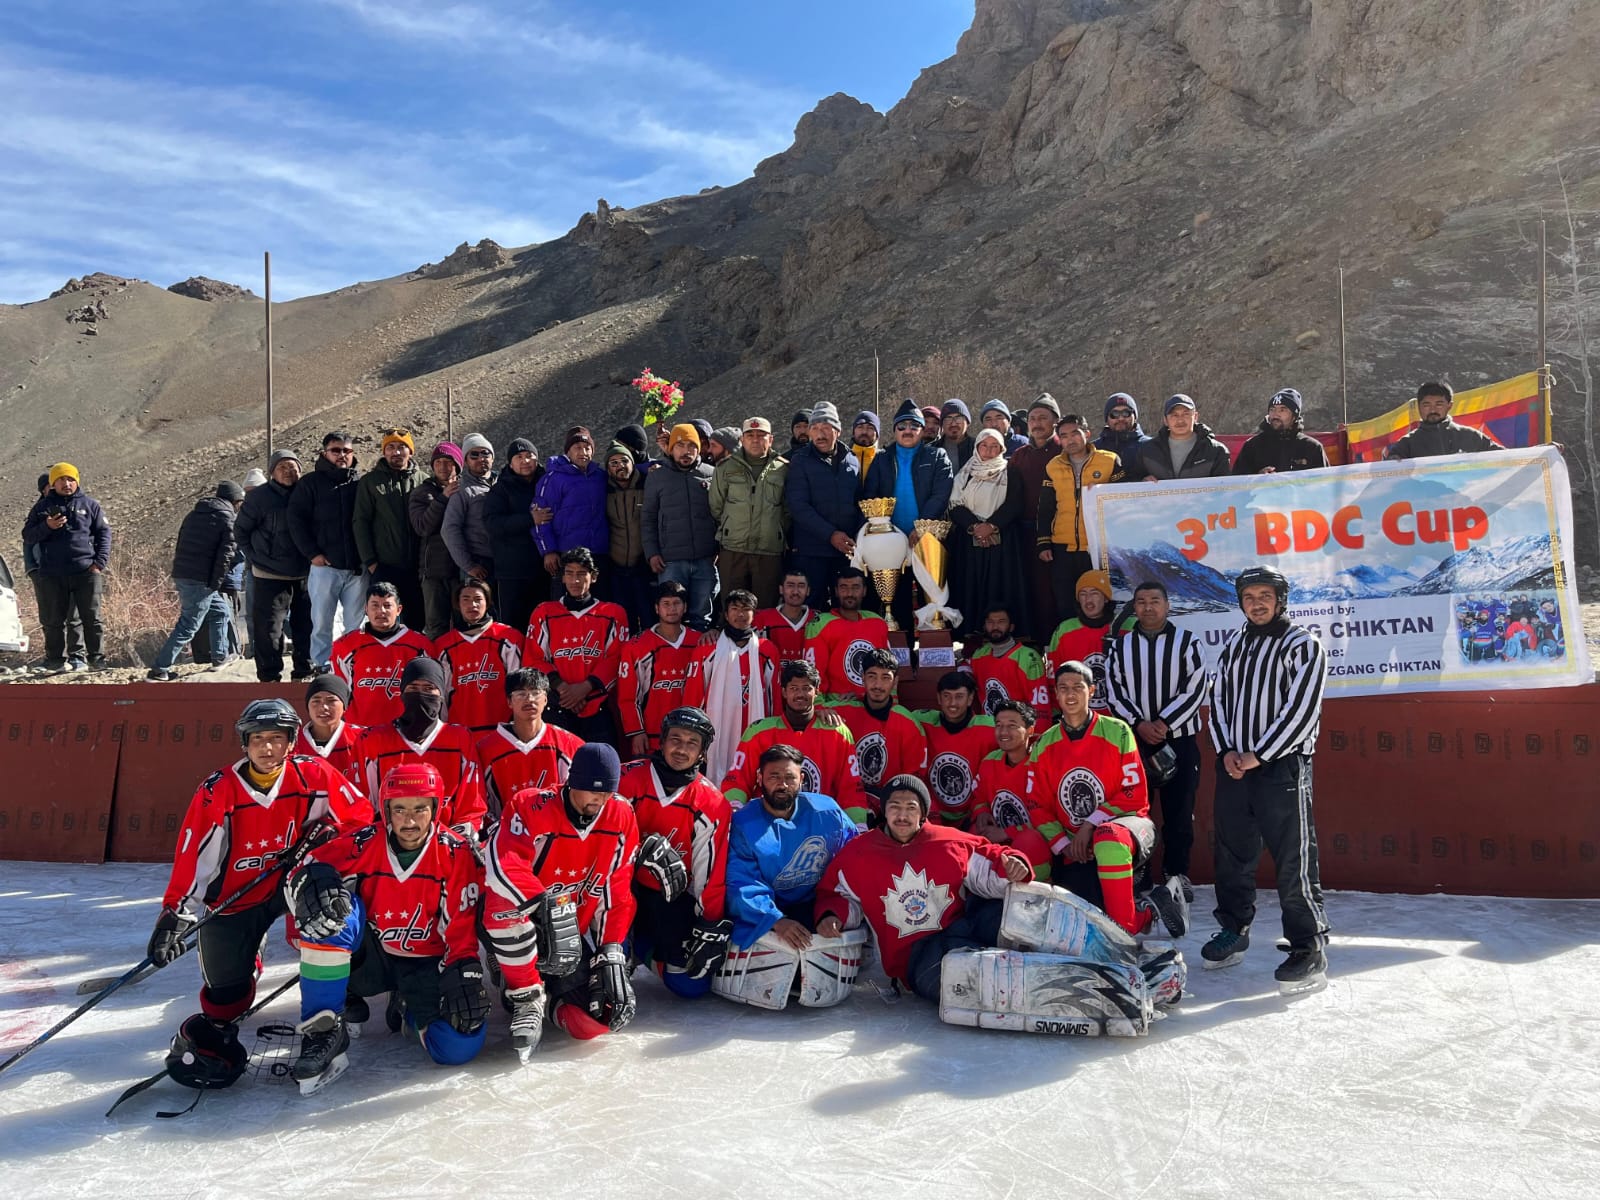 Winter Sports Thrive in Kargil as 15th CEC Ice Hockey Championship Kicks Off